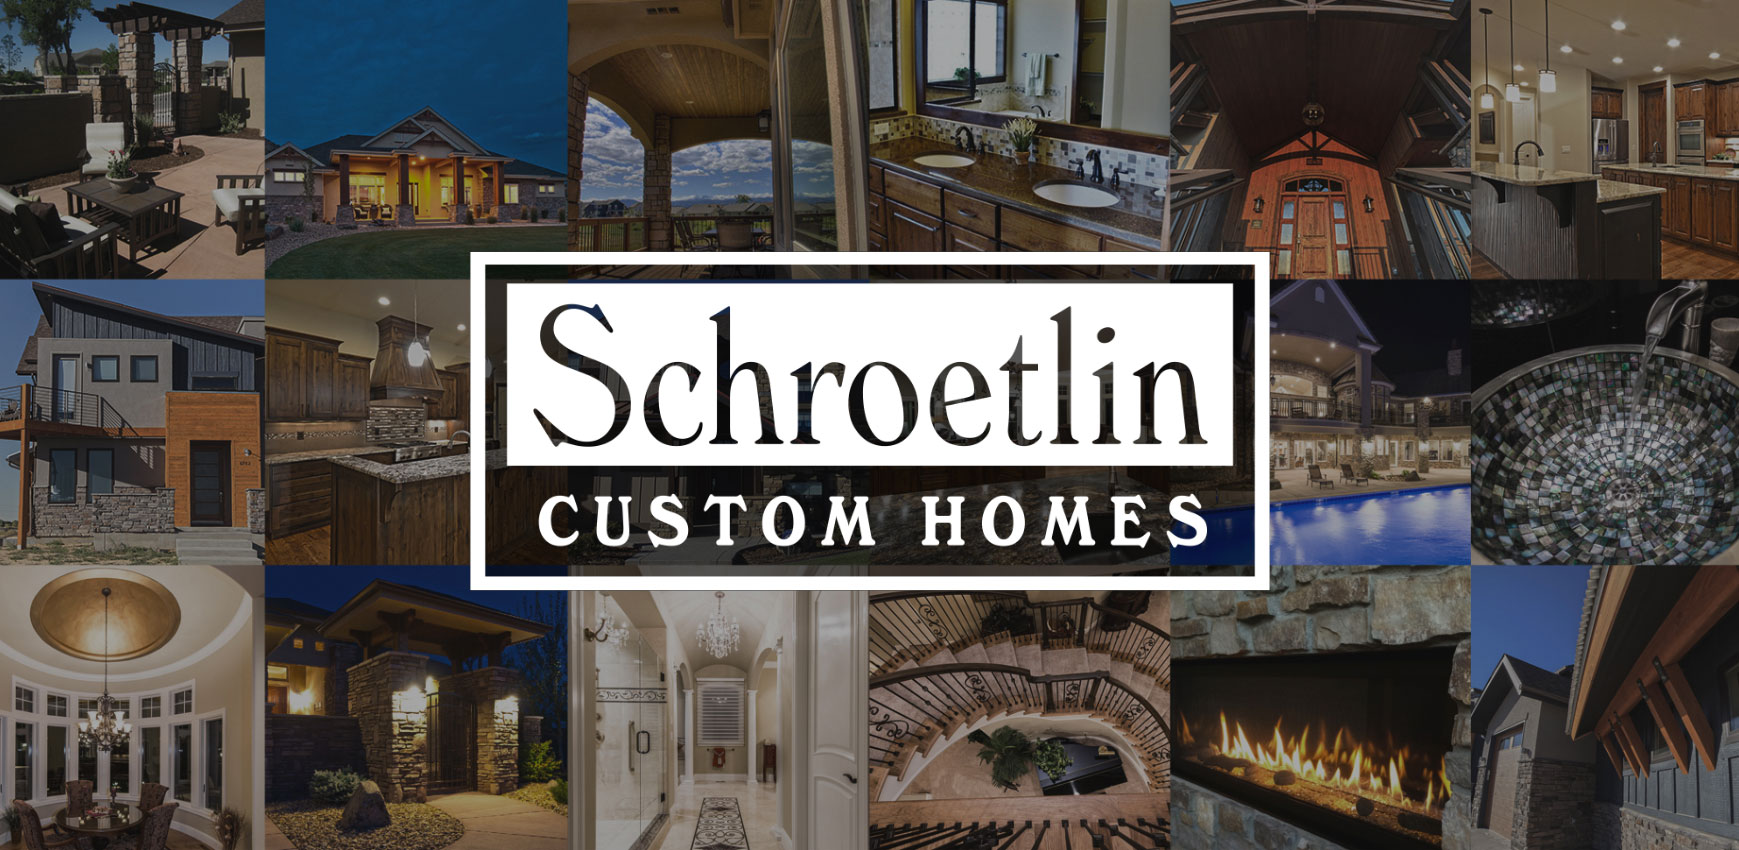 Schroetlin Custom Homes